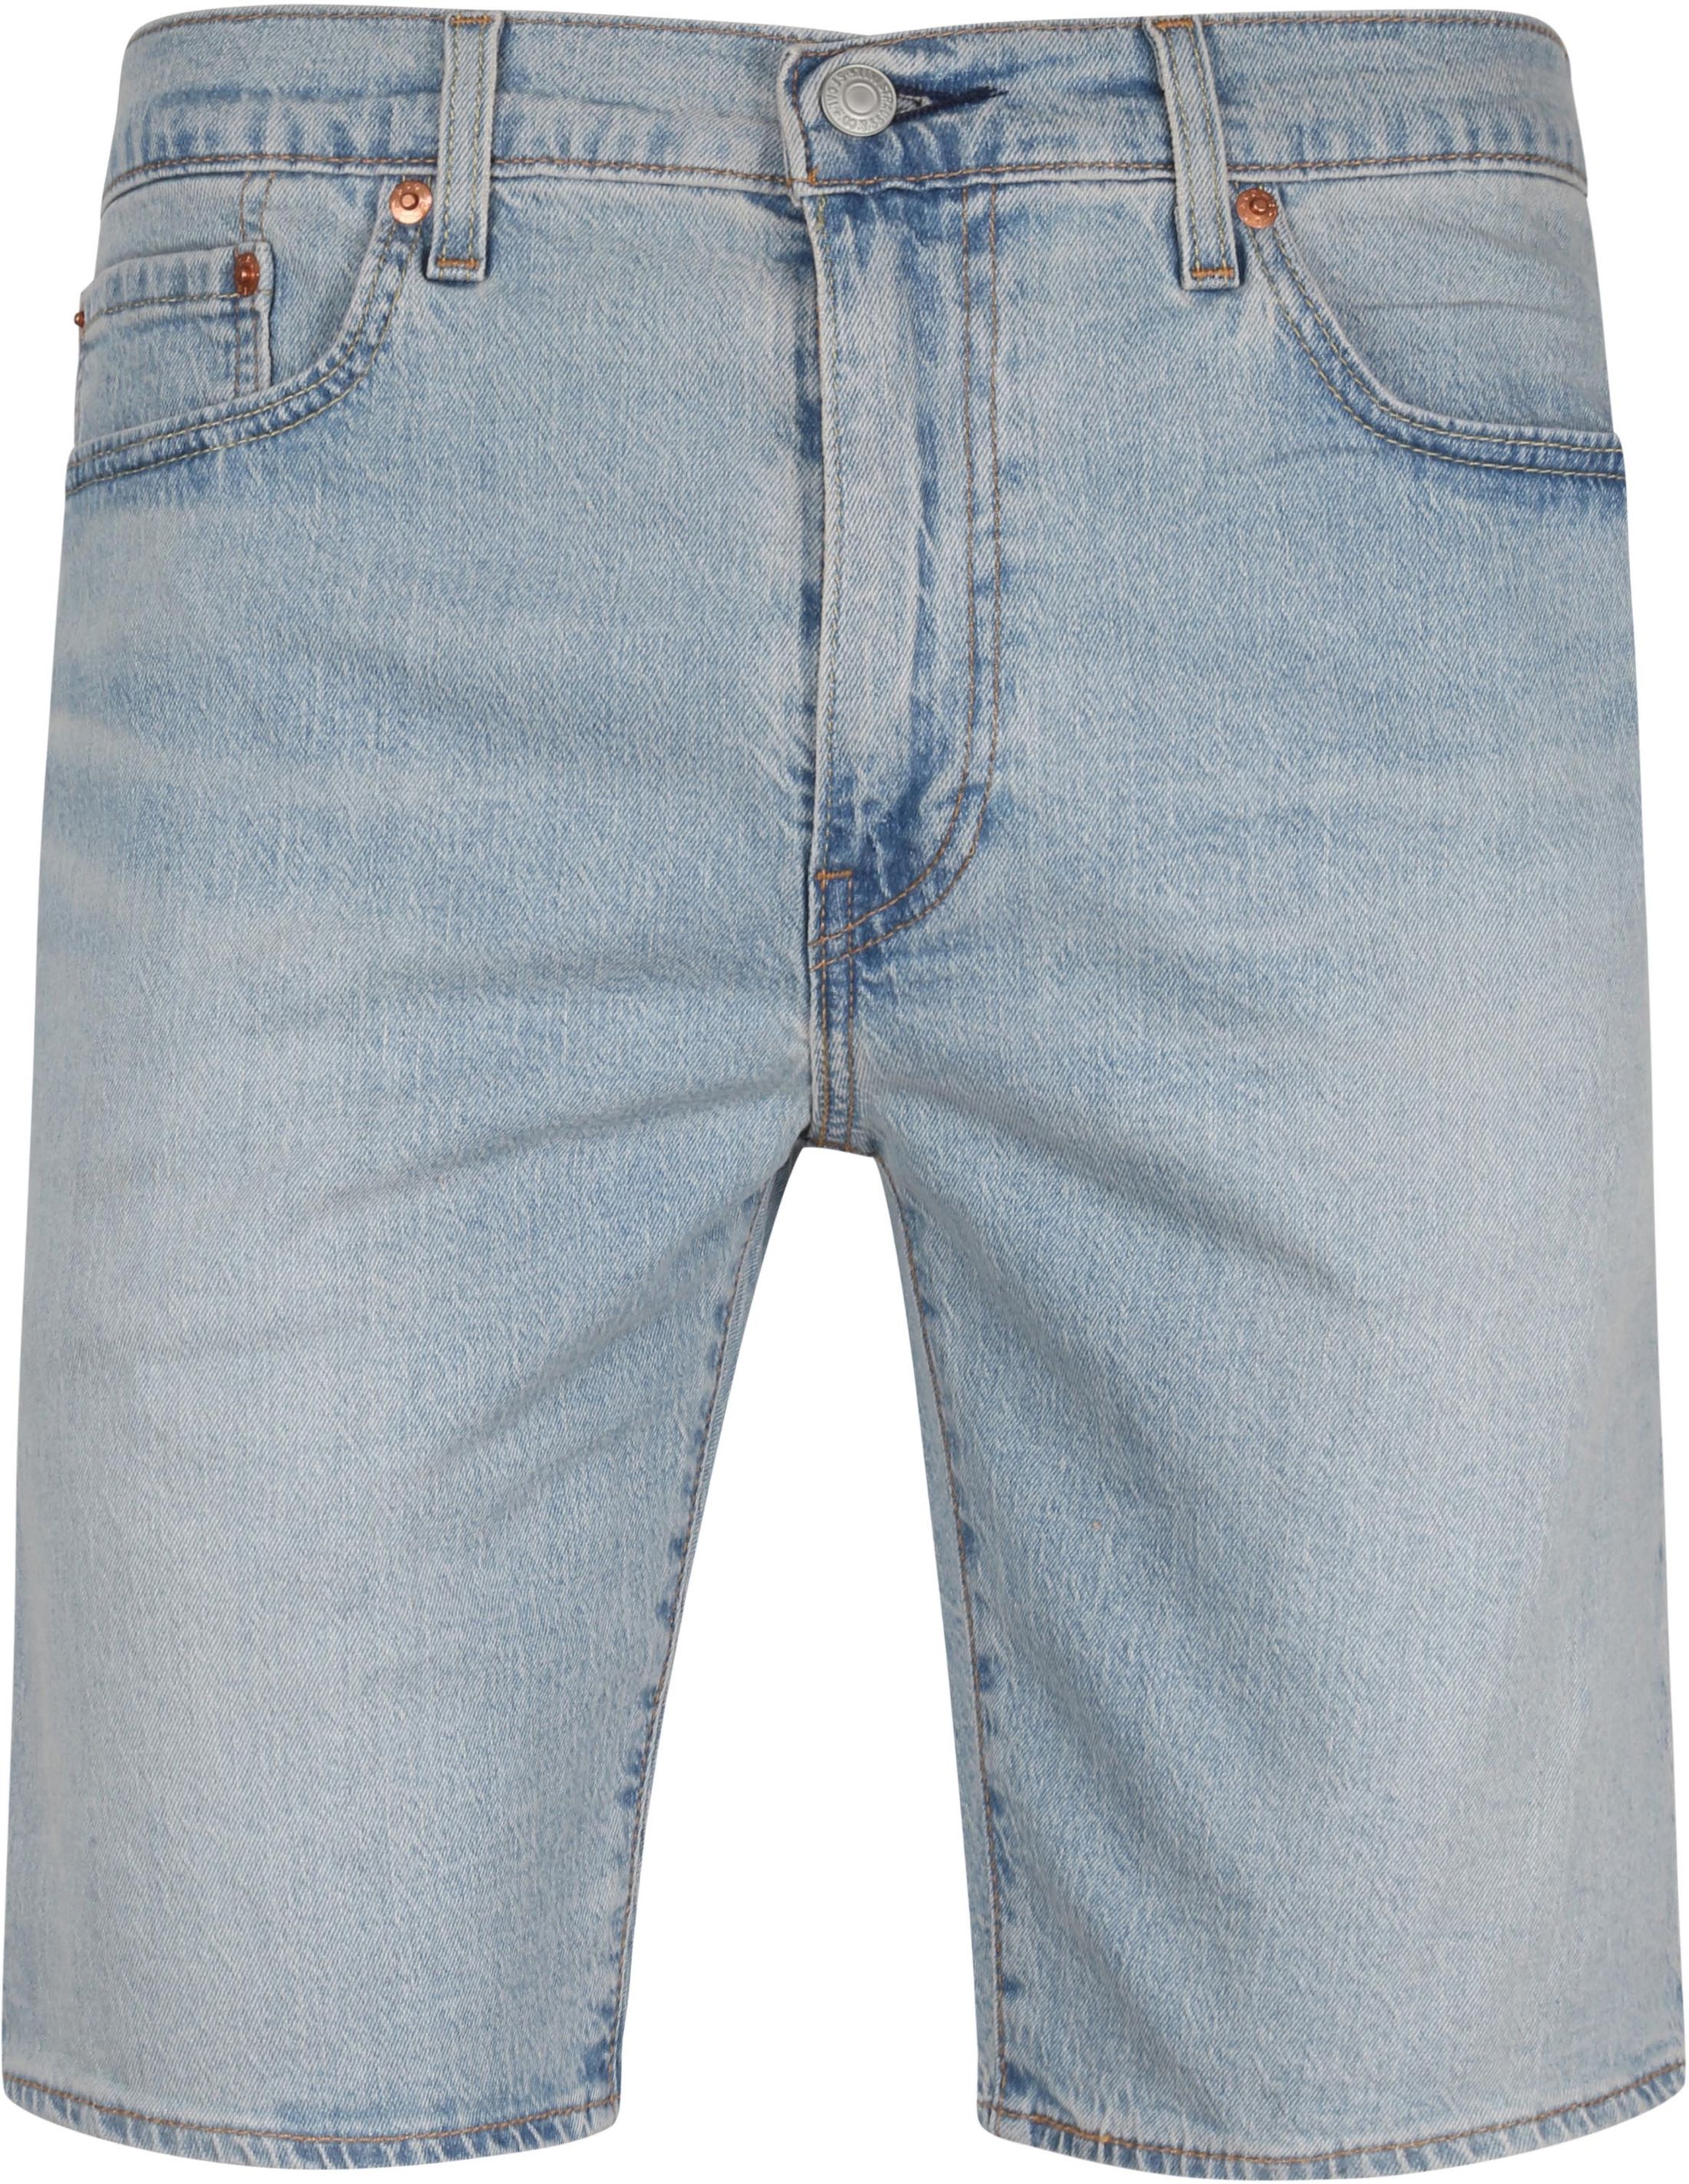 Levi's 405 Denim Shorts Light Blue size 31